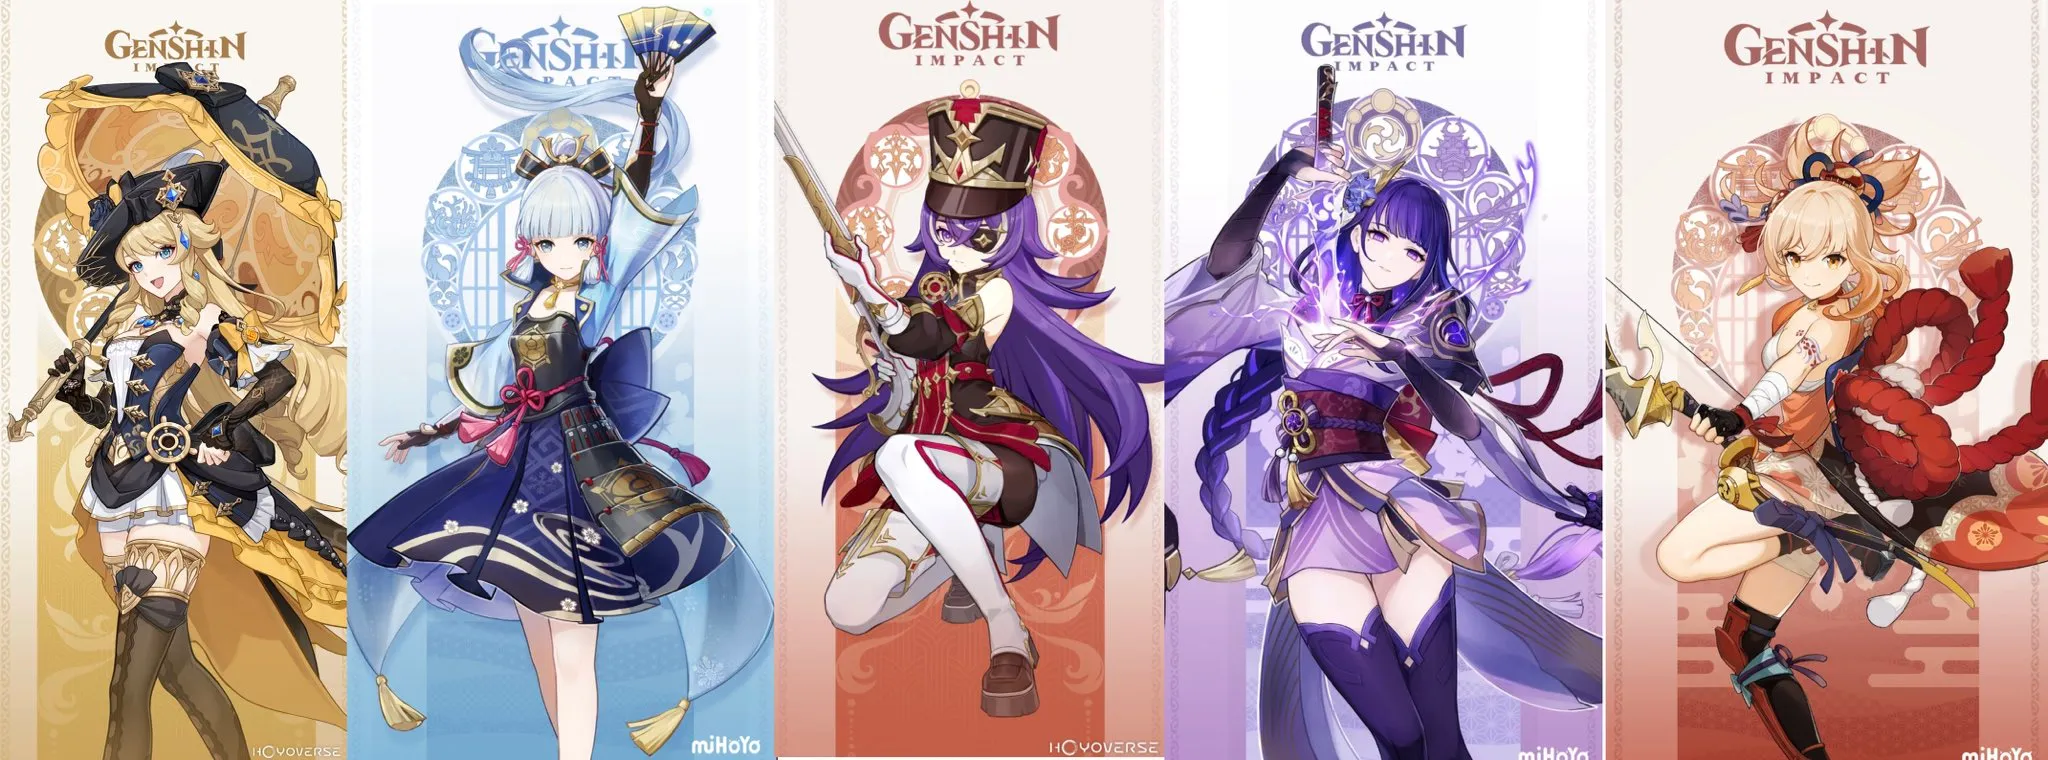 Genshin Impact 4.3 Release Date, Banners & More 2.jpg